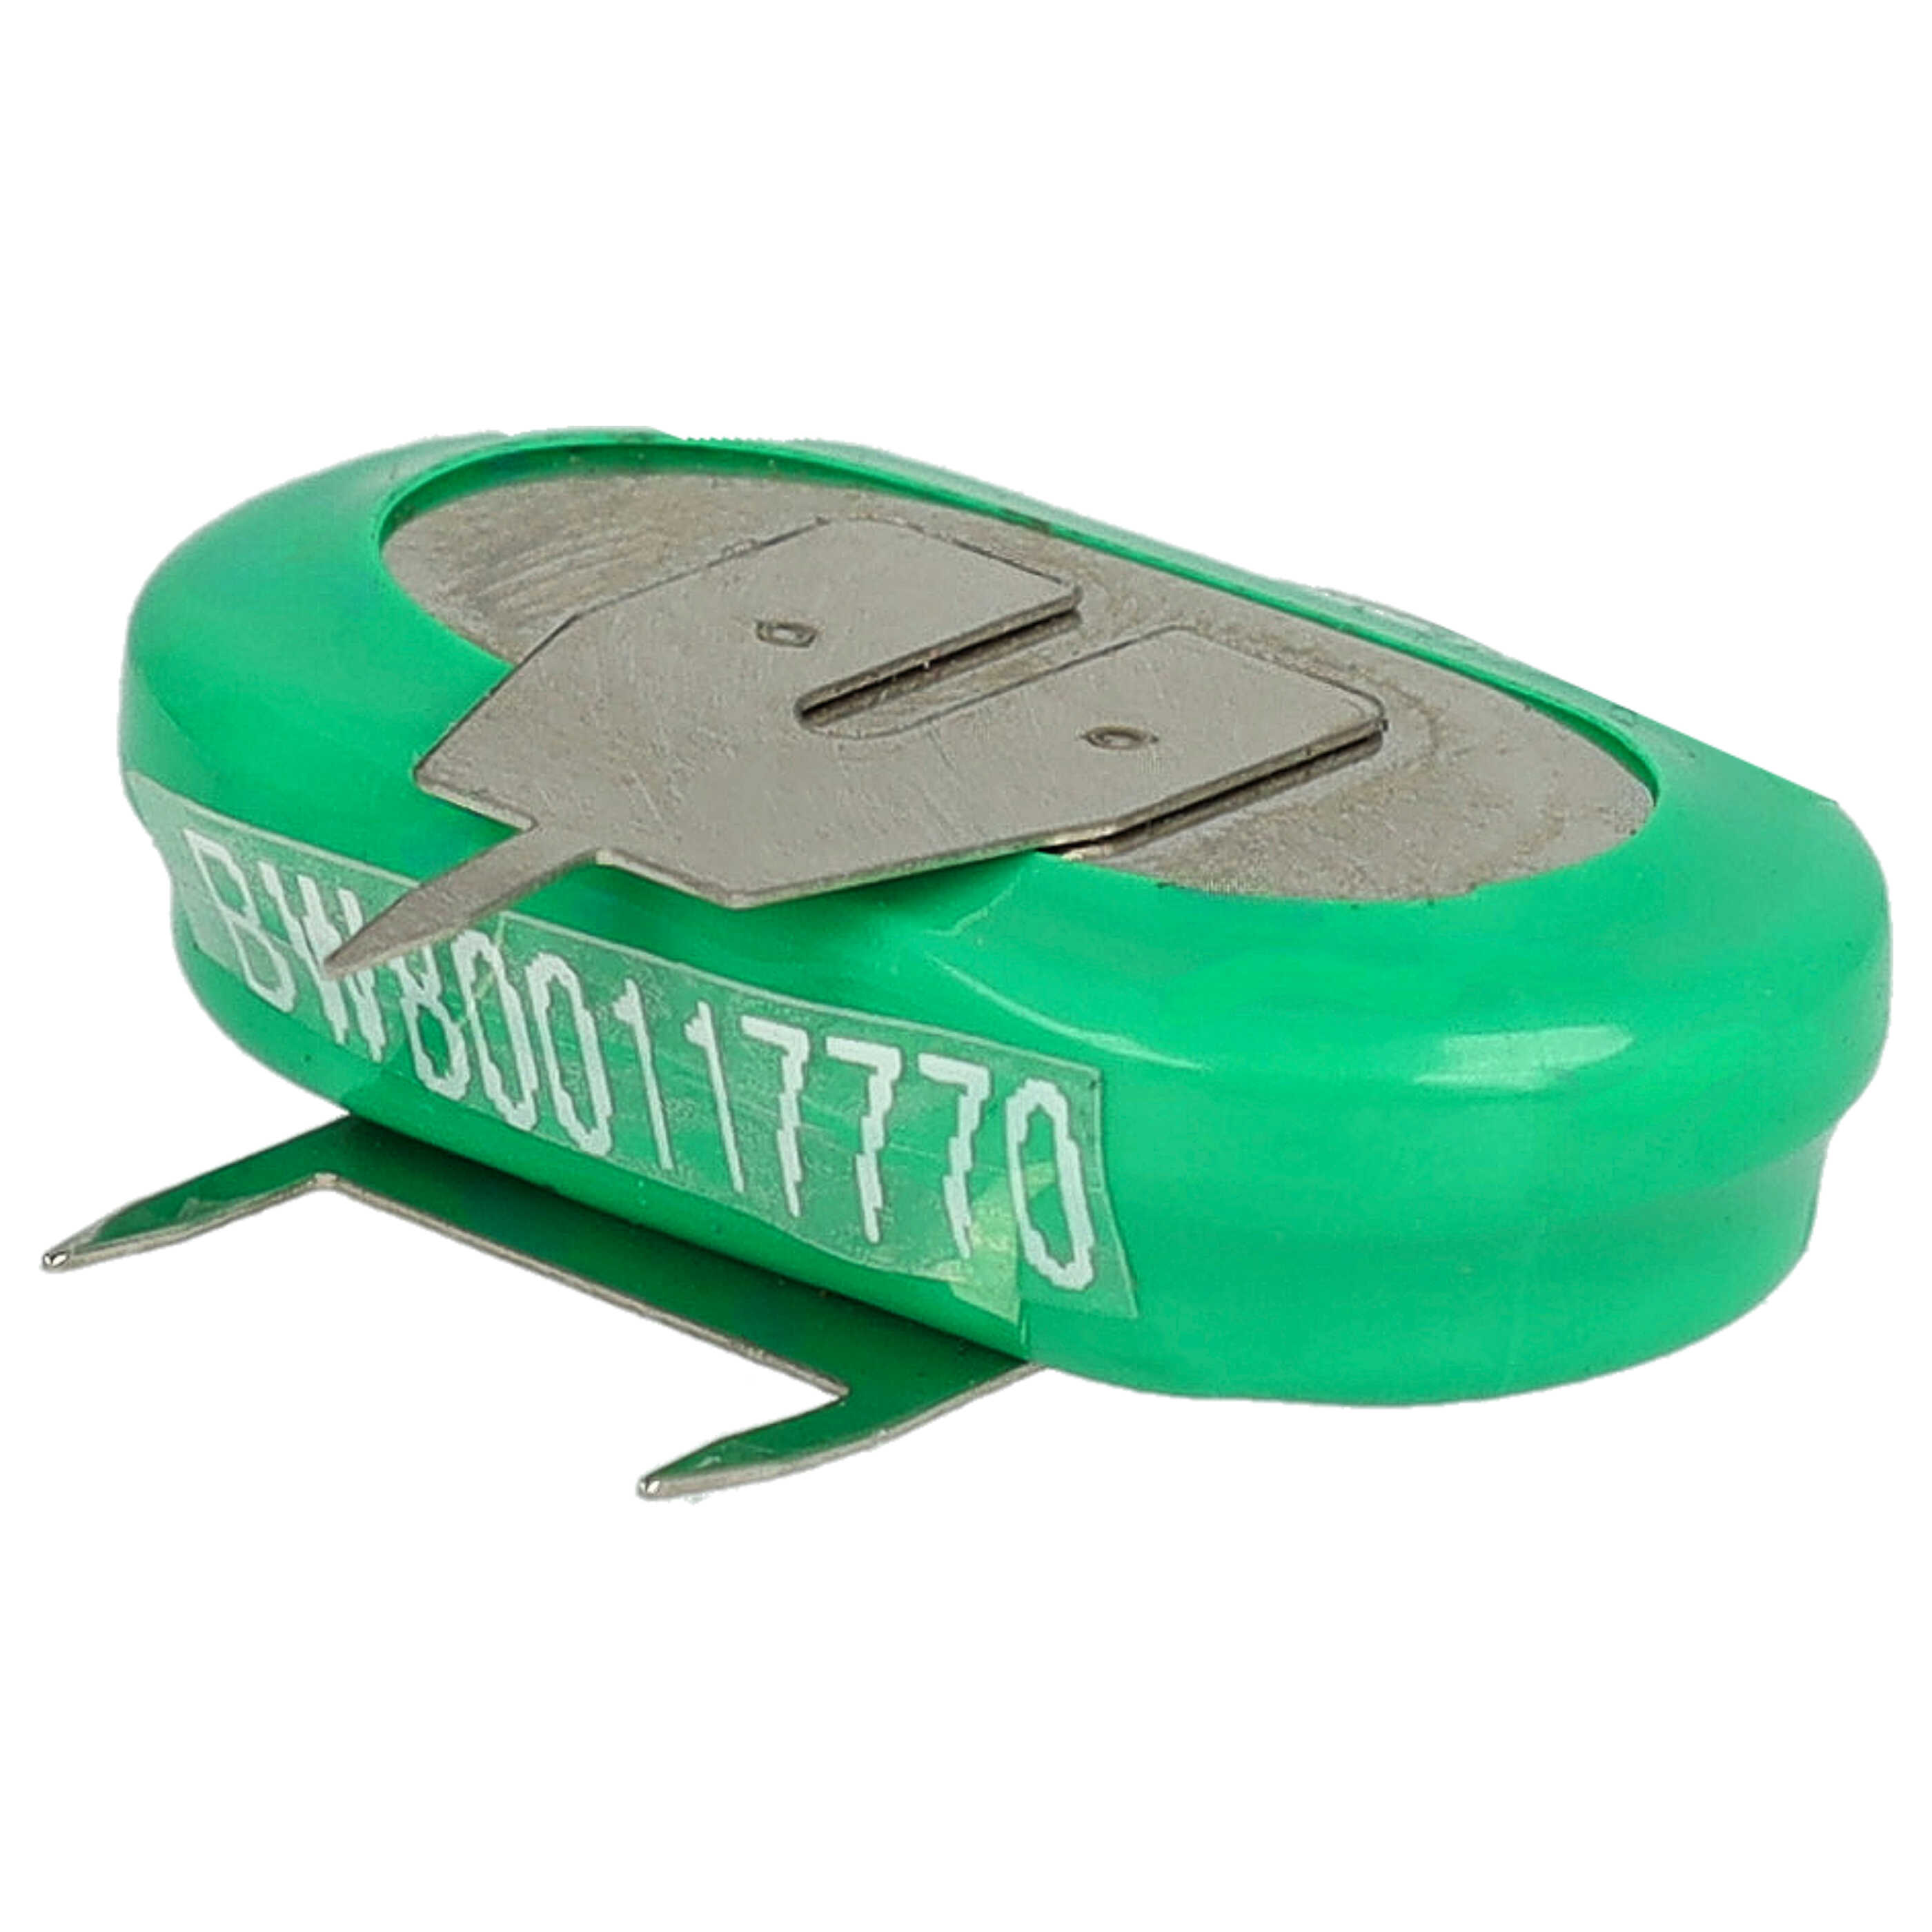 Akumulator guzikowy (1x ogniwo) typ 1/V150H 3 pin do modeli, lamp solarnych itp. - 150 mAh, 1,2 V, NiMH